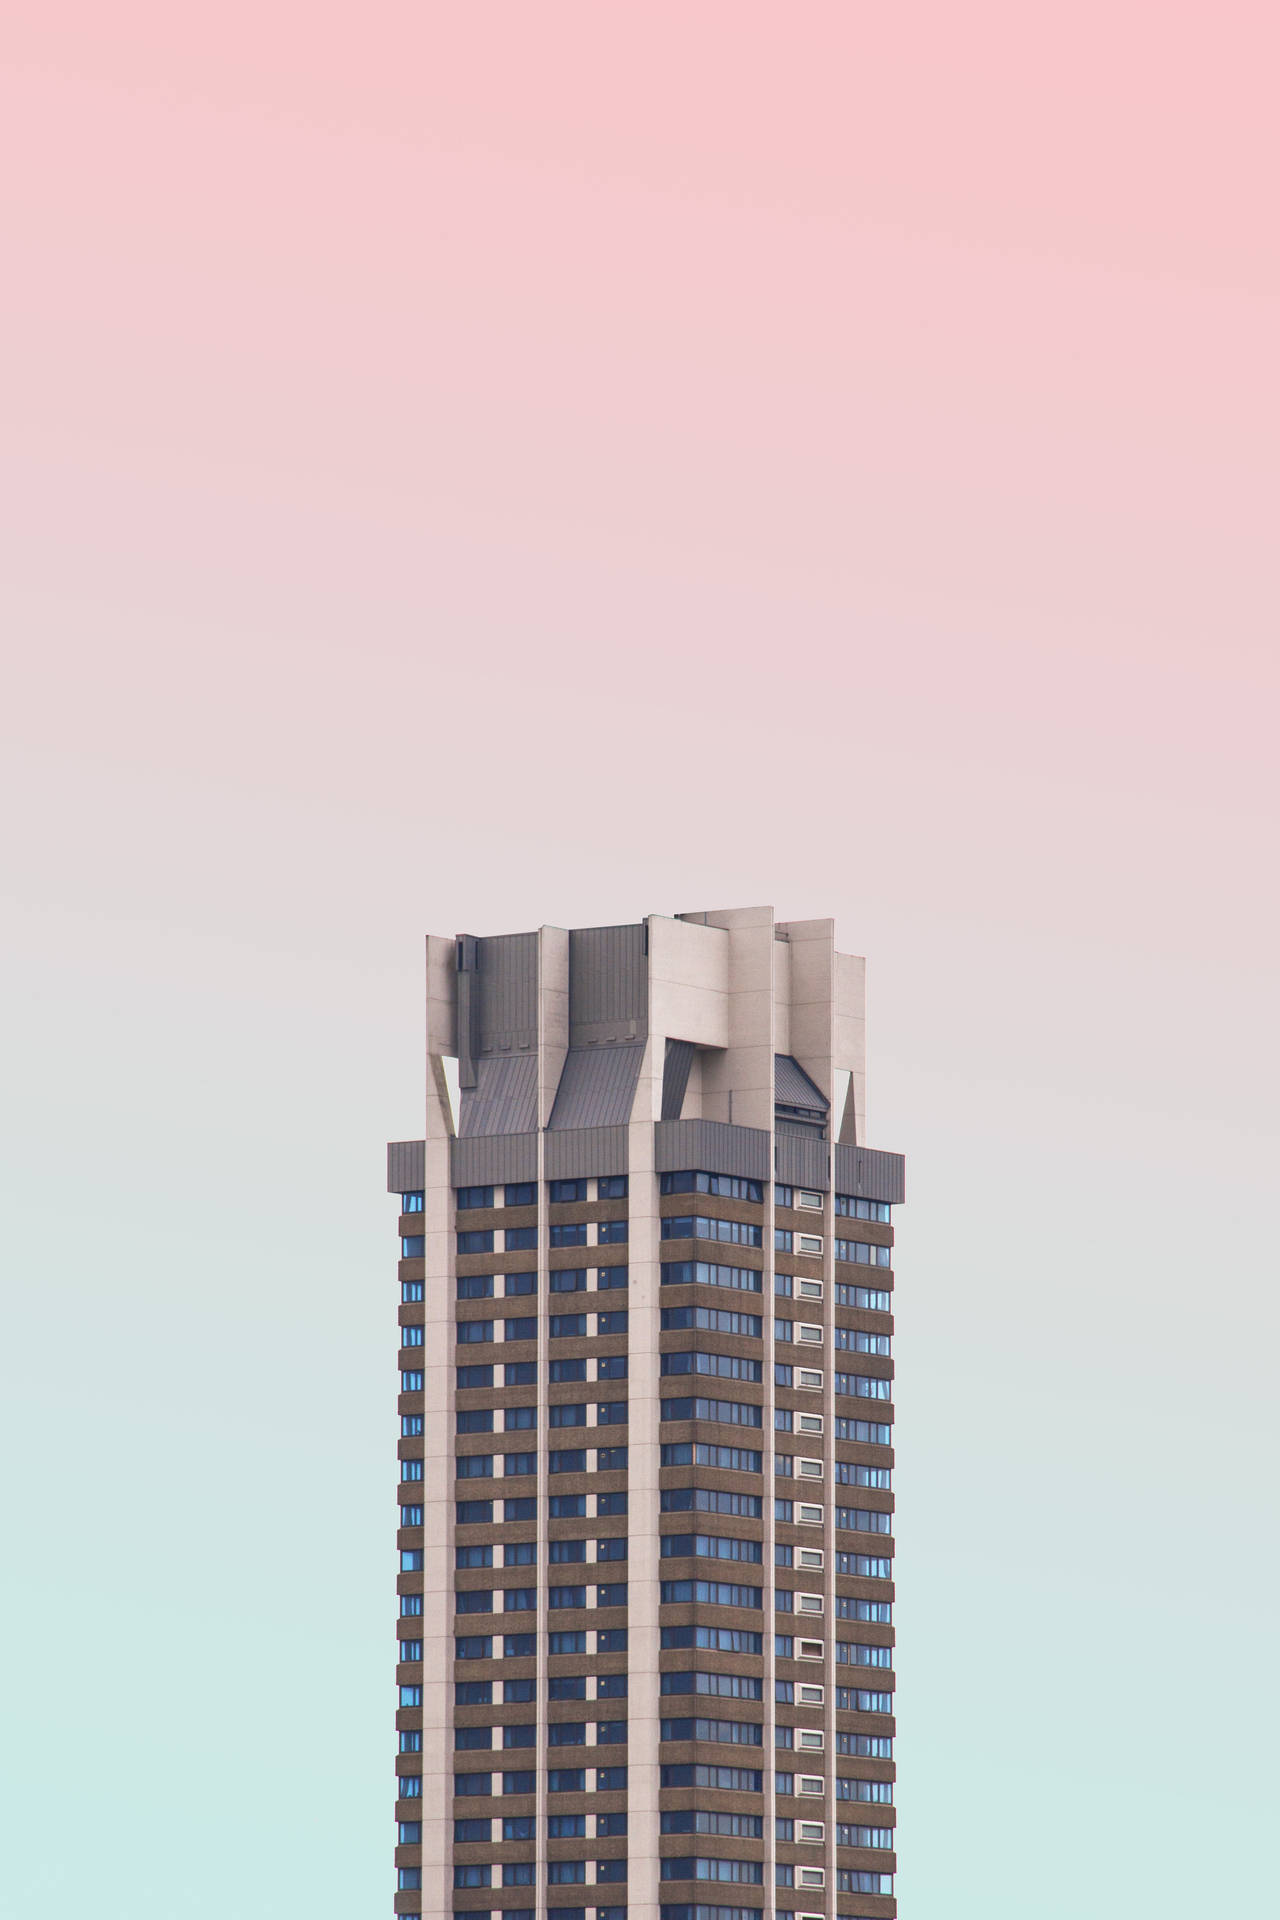 Basil Spence Skyscraper Uk Background